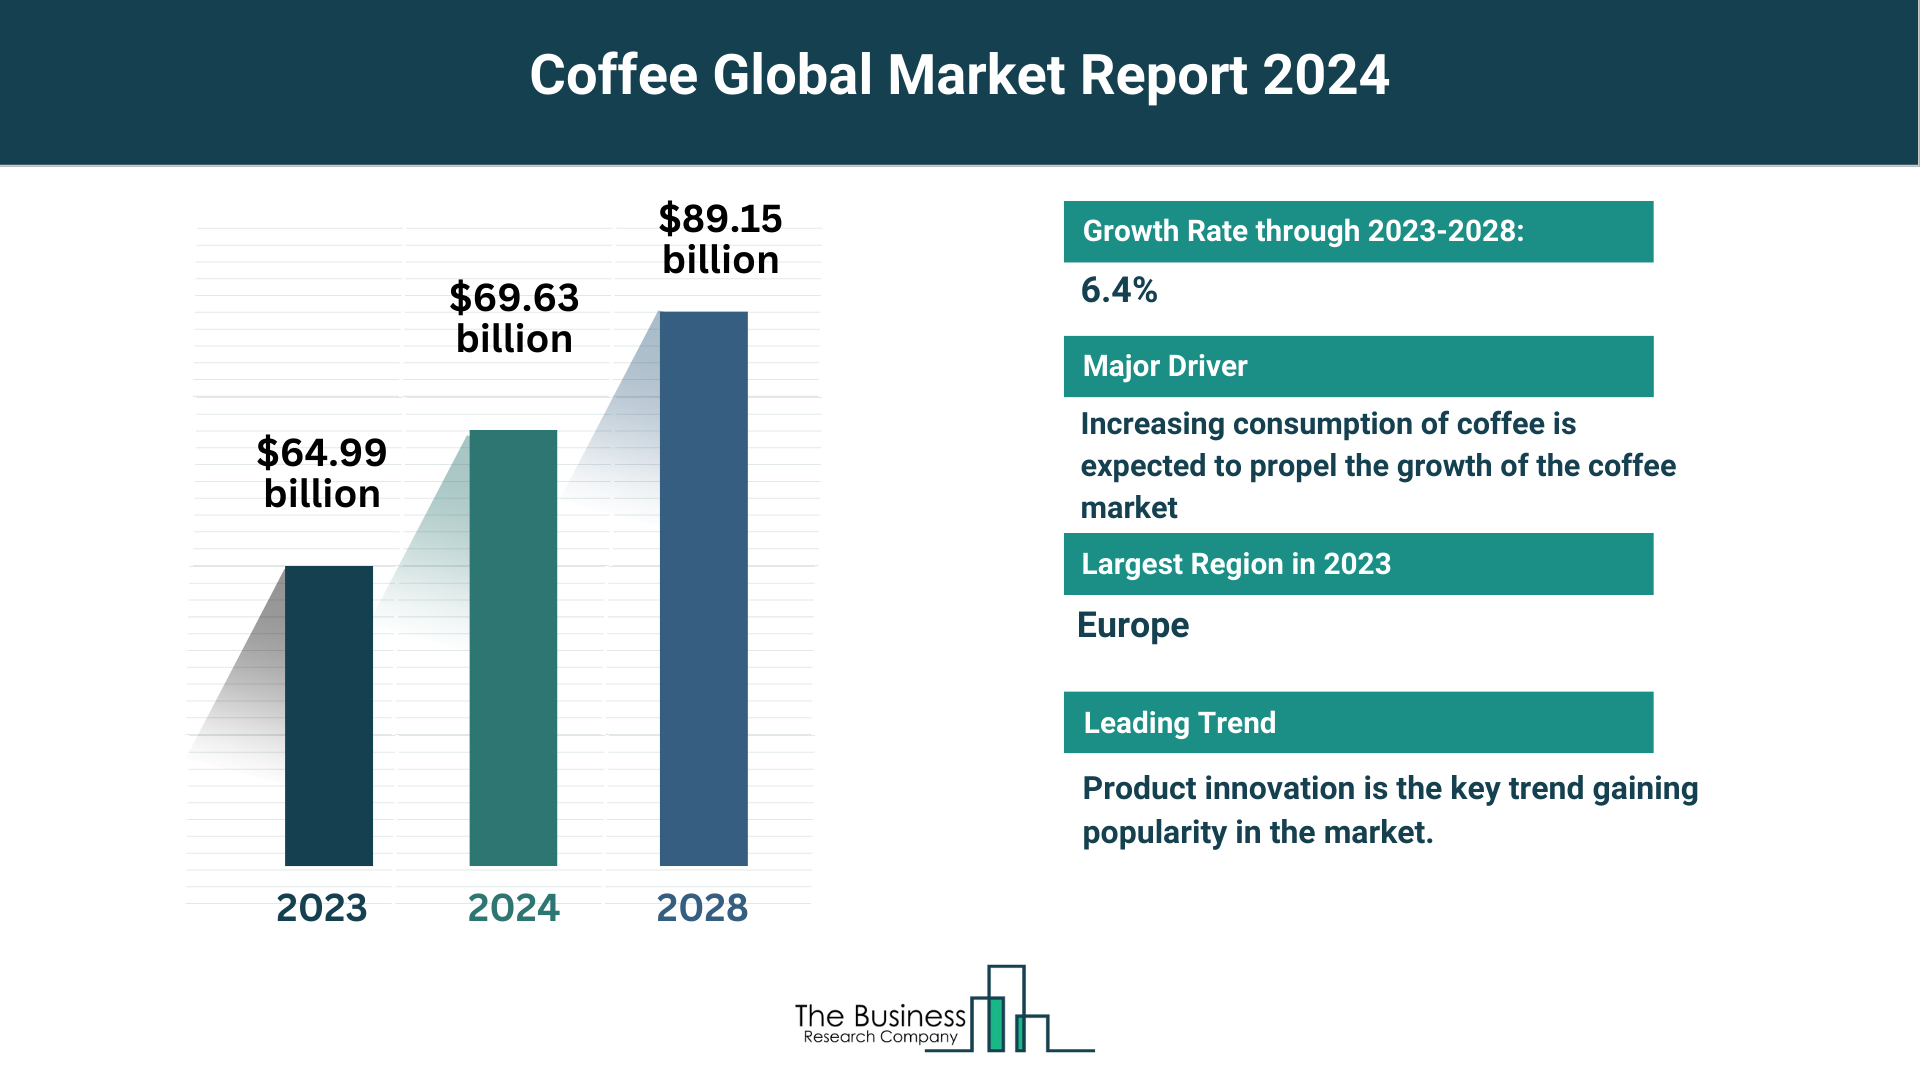 Global Coffee Market